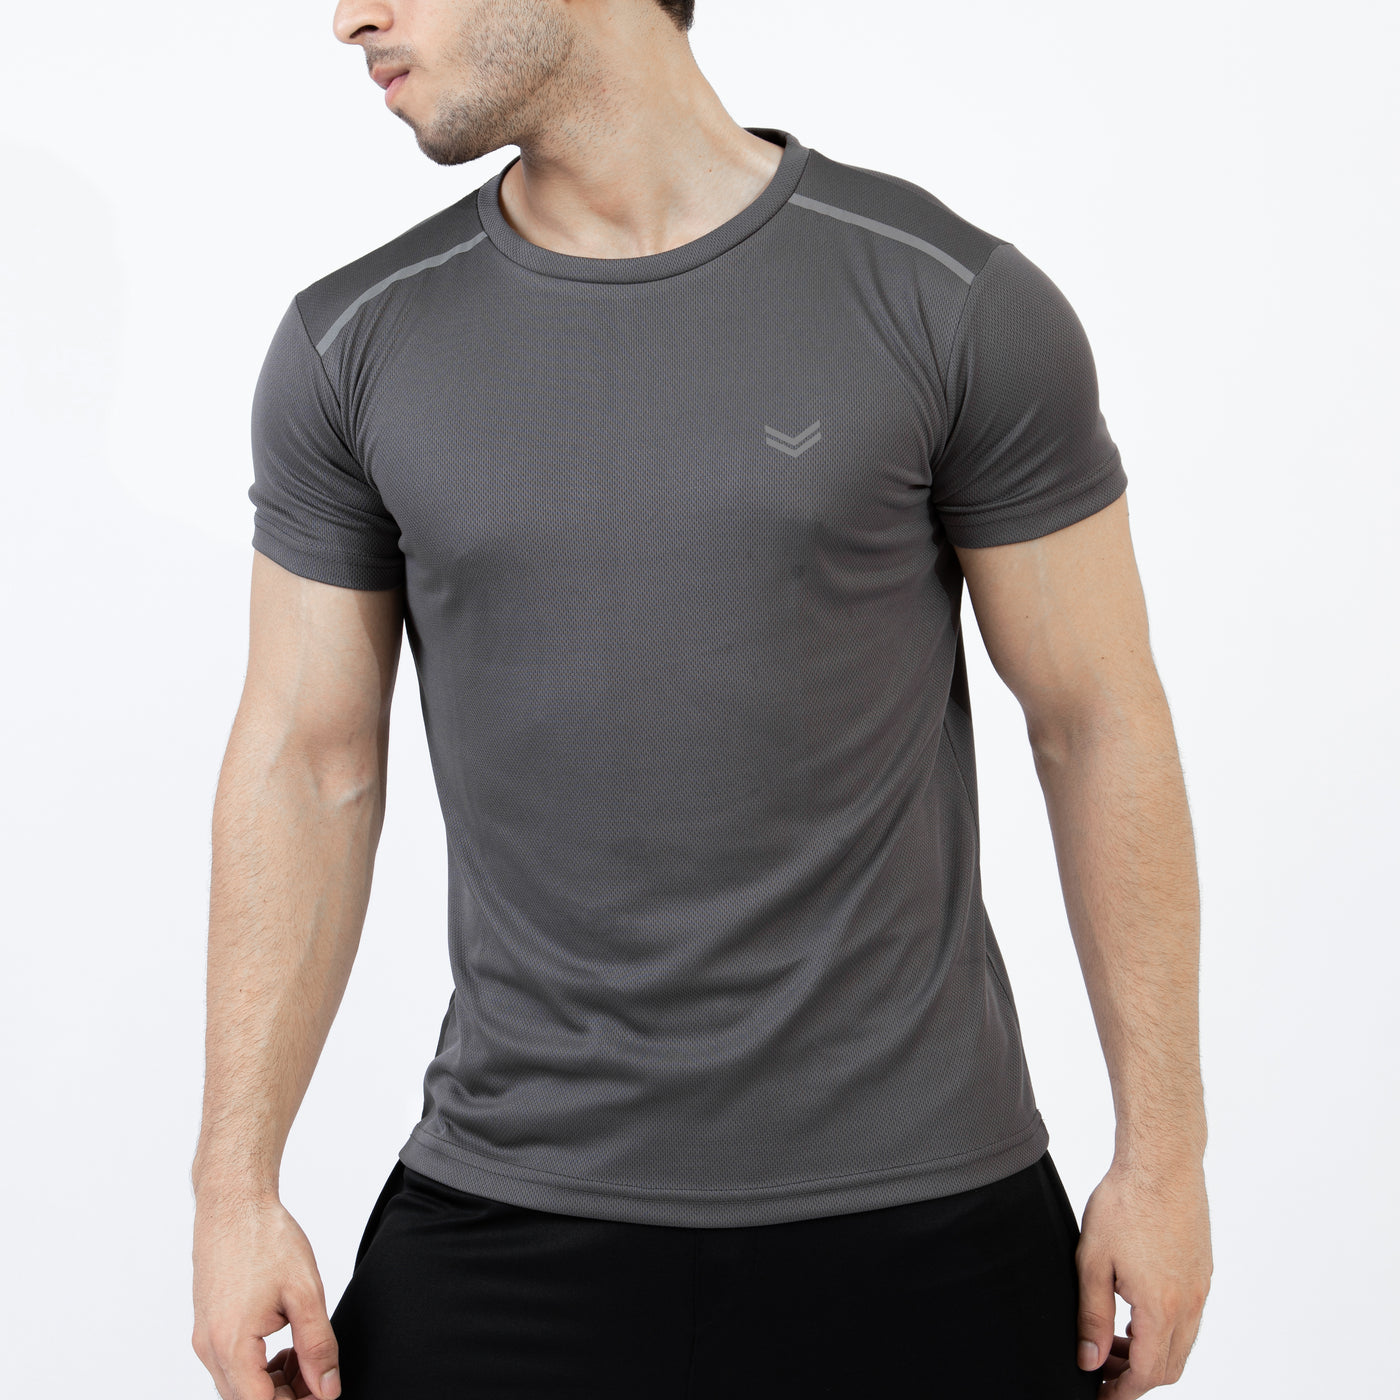 Gray Mesh Quick Dry T-Shirt with Shoulder Reflectors